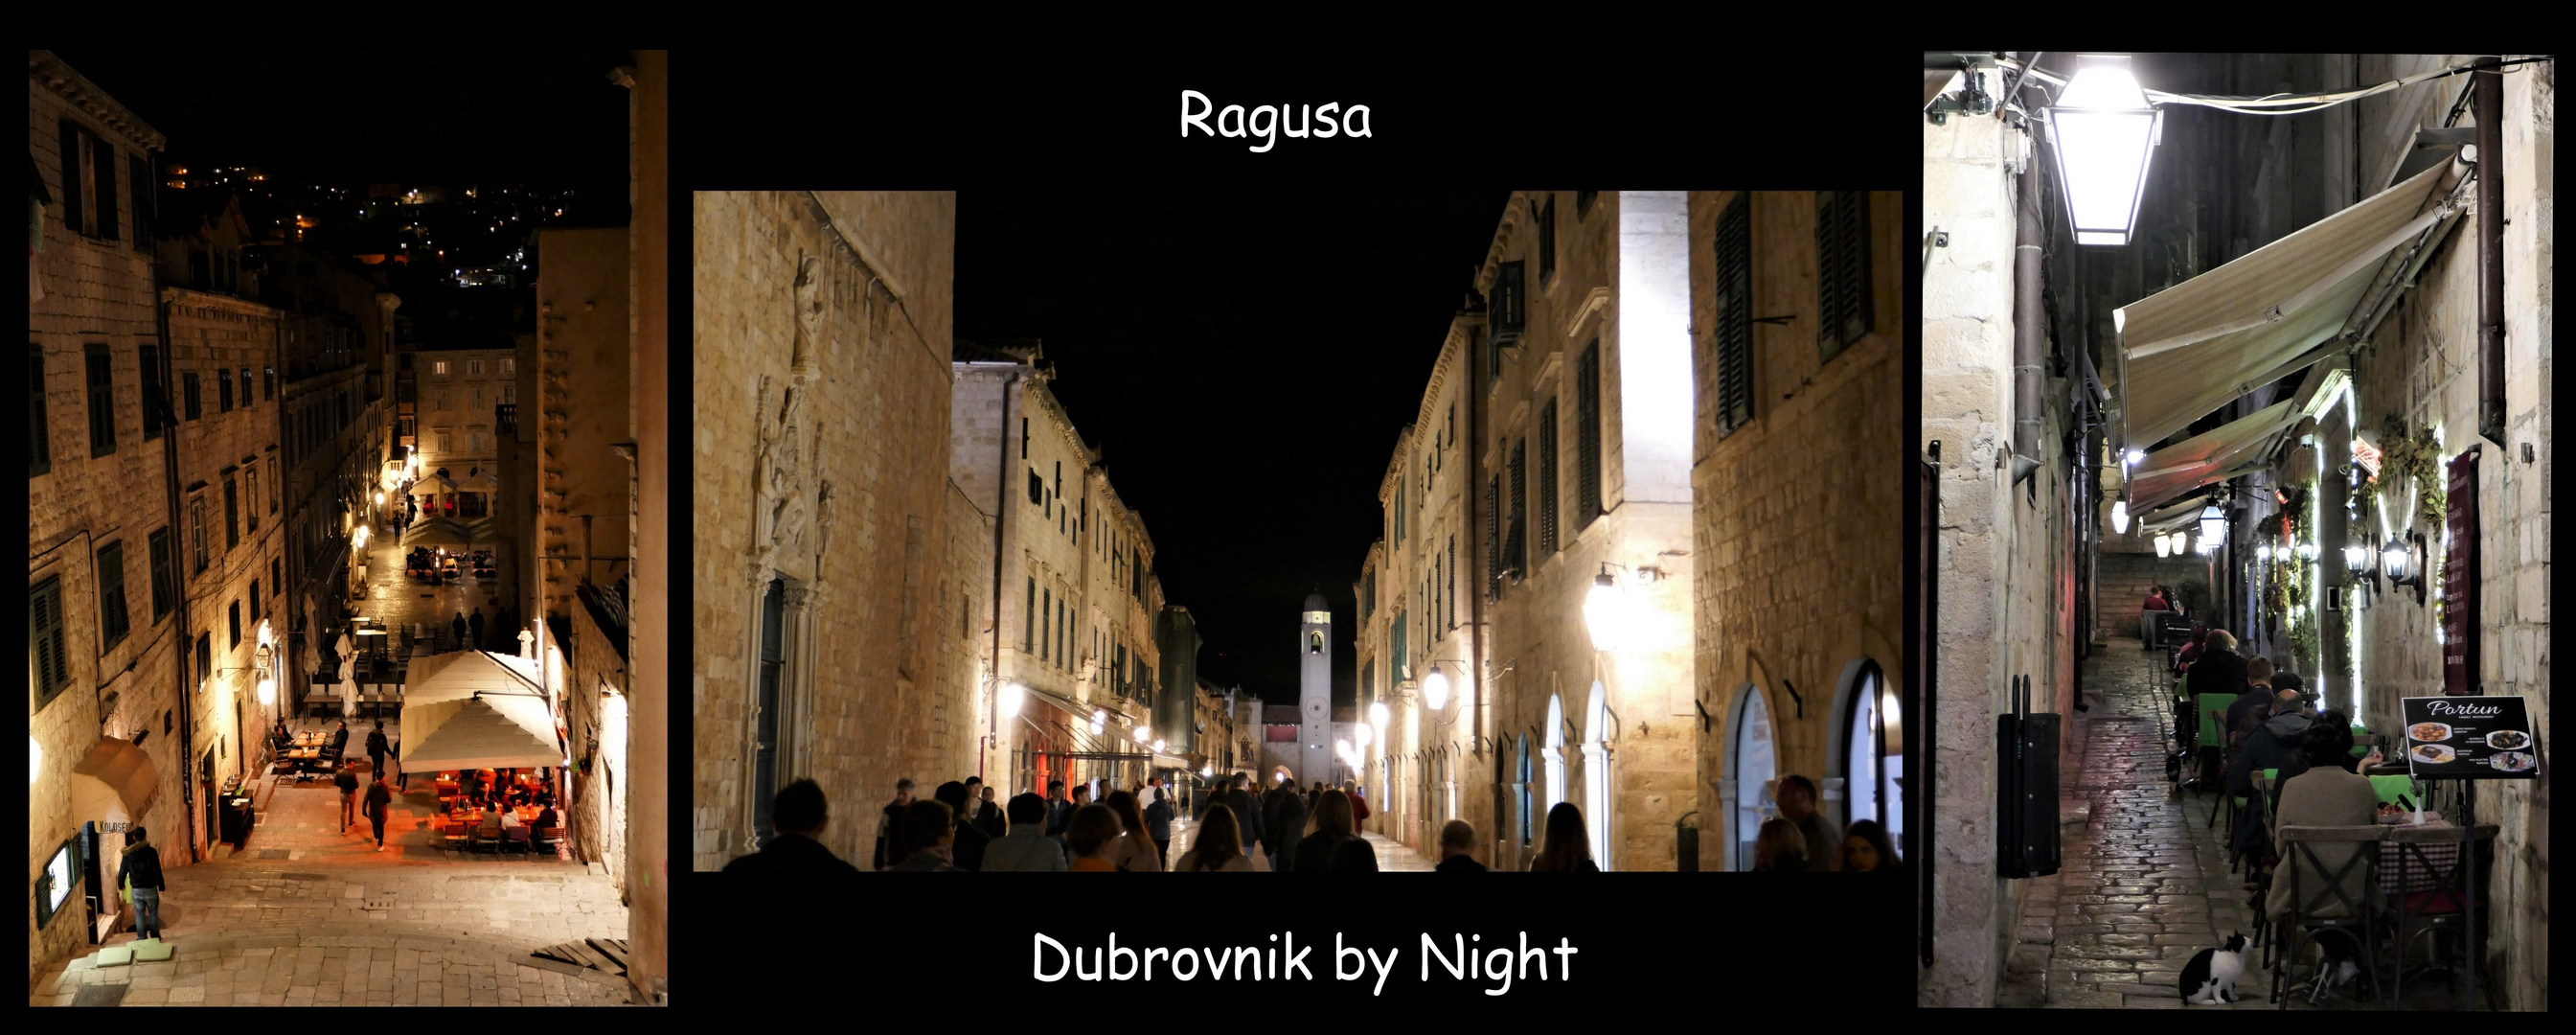 Balkan 10: Dubrovnik by Night 02